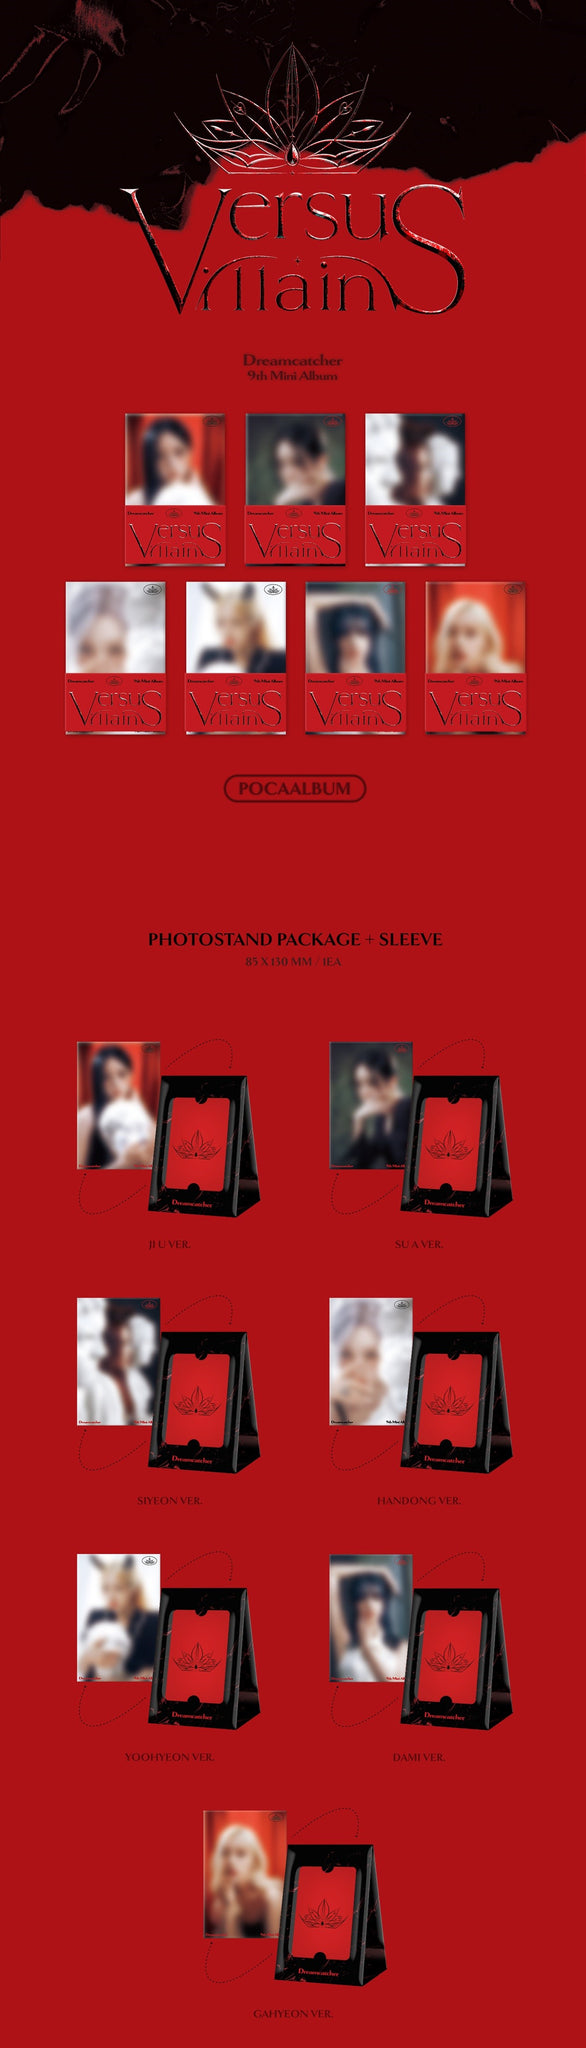 Dreamcatcher 9th Mini Album VillainS POCA Version Inclusions Photo Stand Package Sleeve